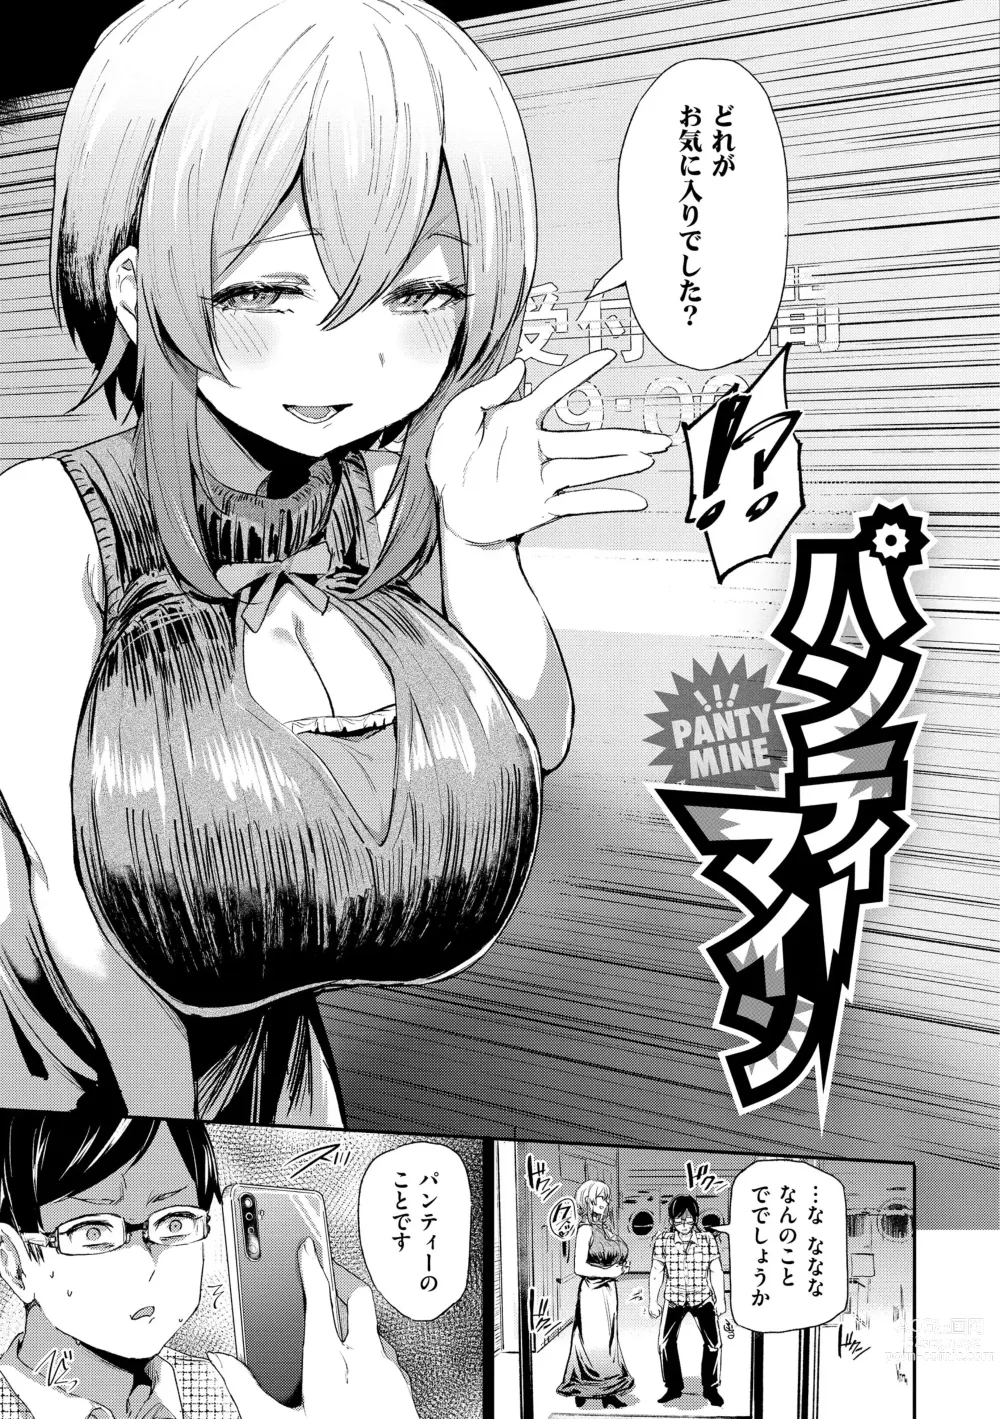 Page 7 of manga Immoral Mine